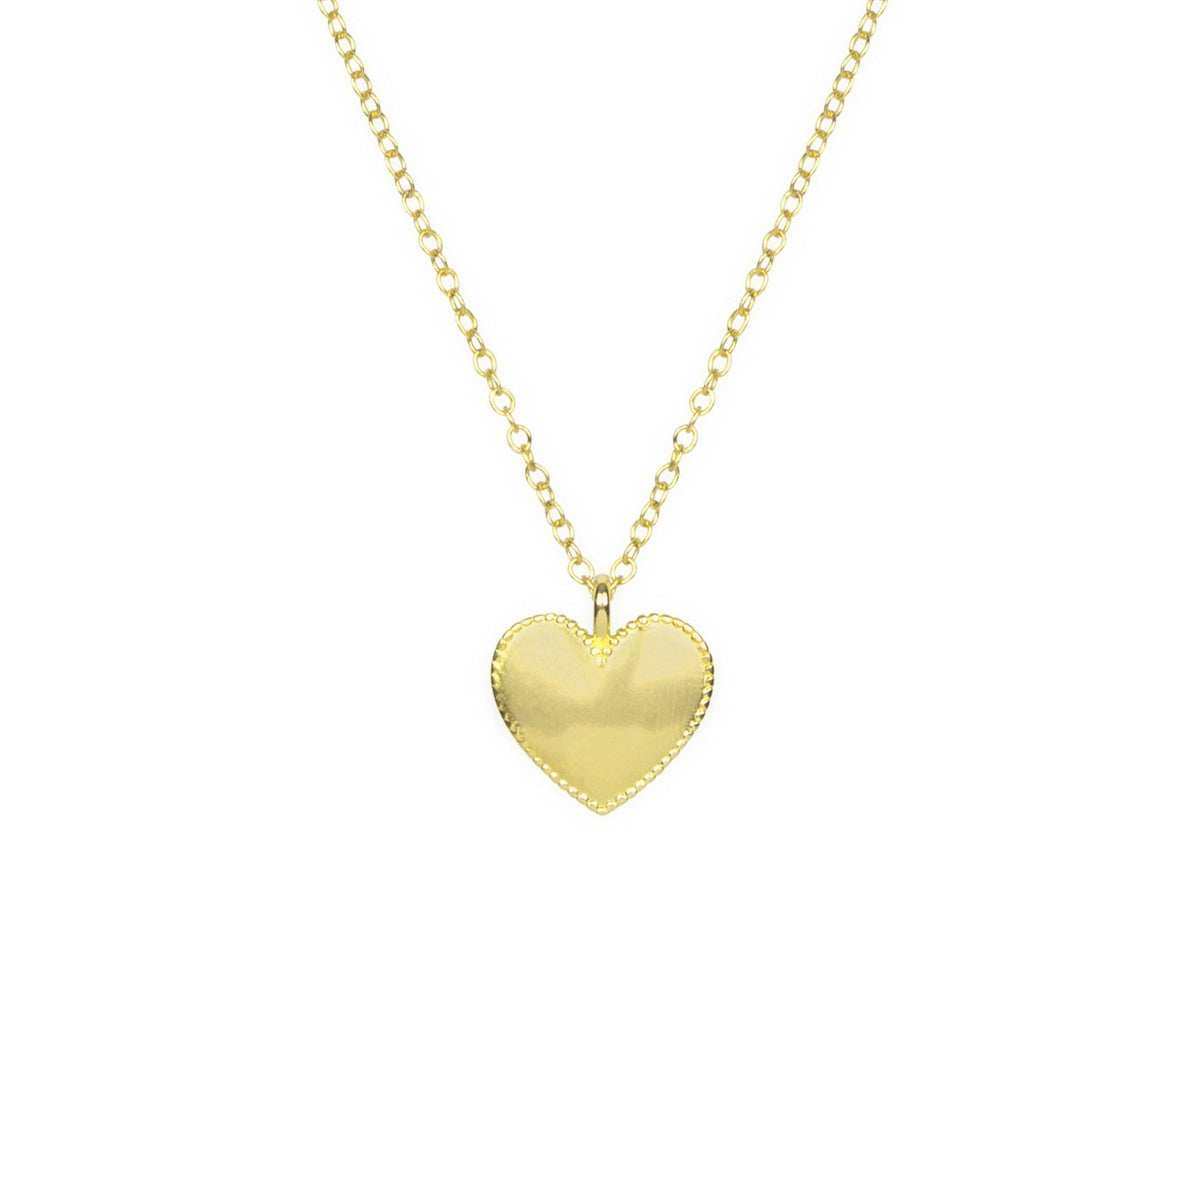 Katie Dean Jewelry Beaded Heart Studs - Gold